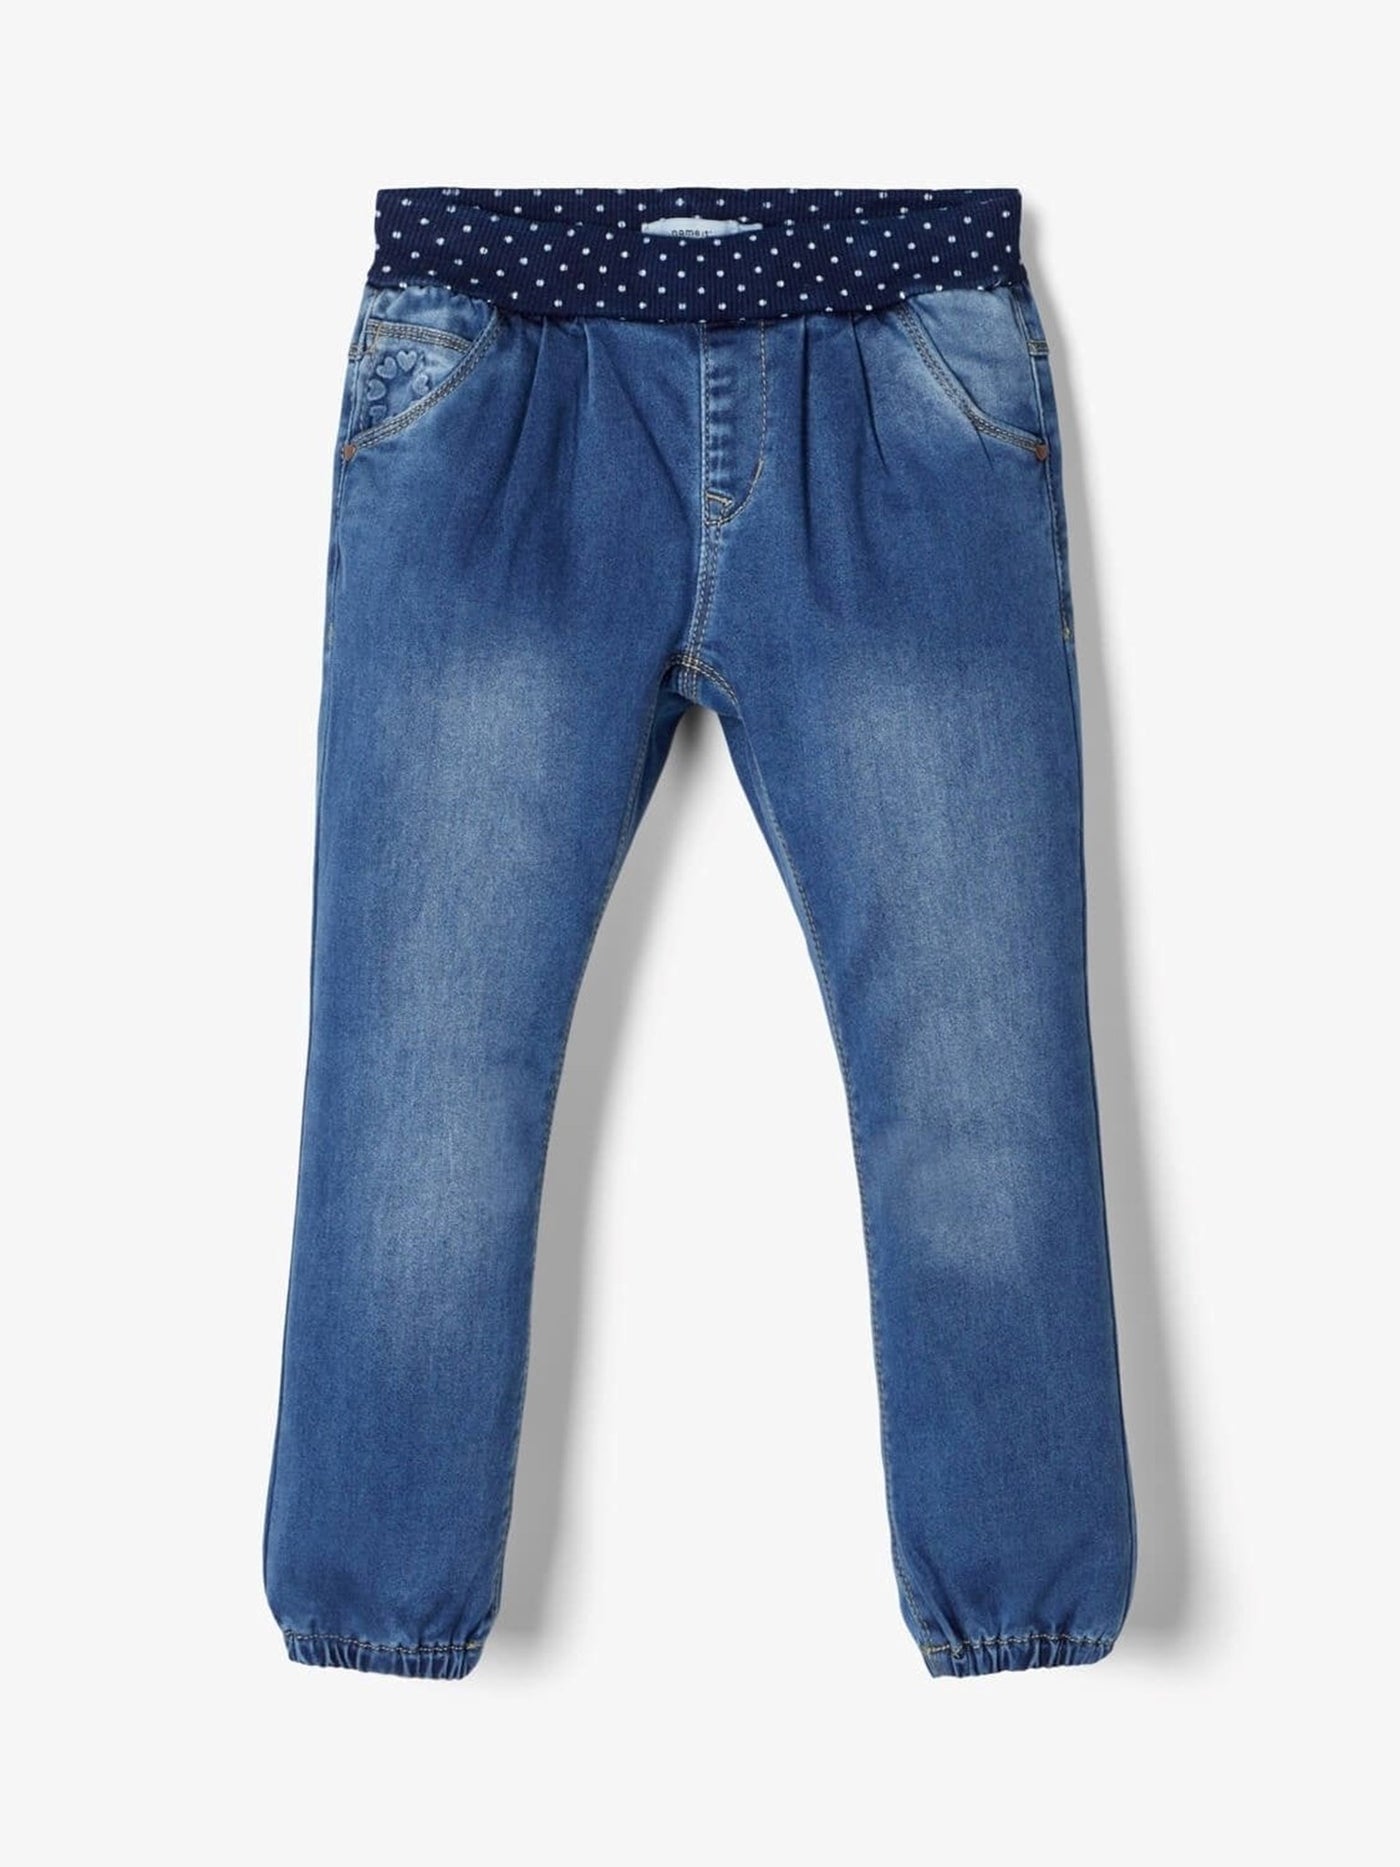 Bibi jeans - Blue denim - Name It - Blue 3